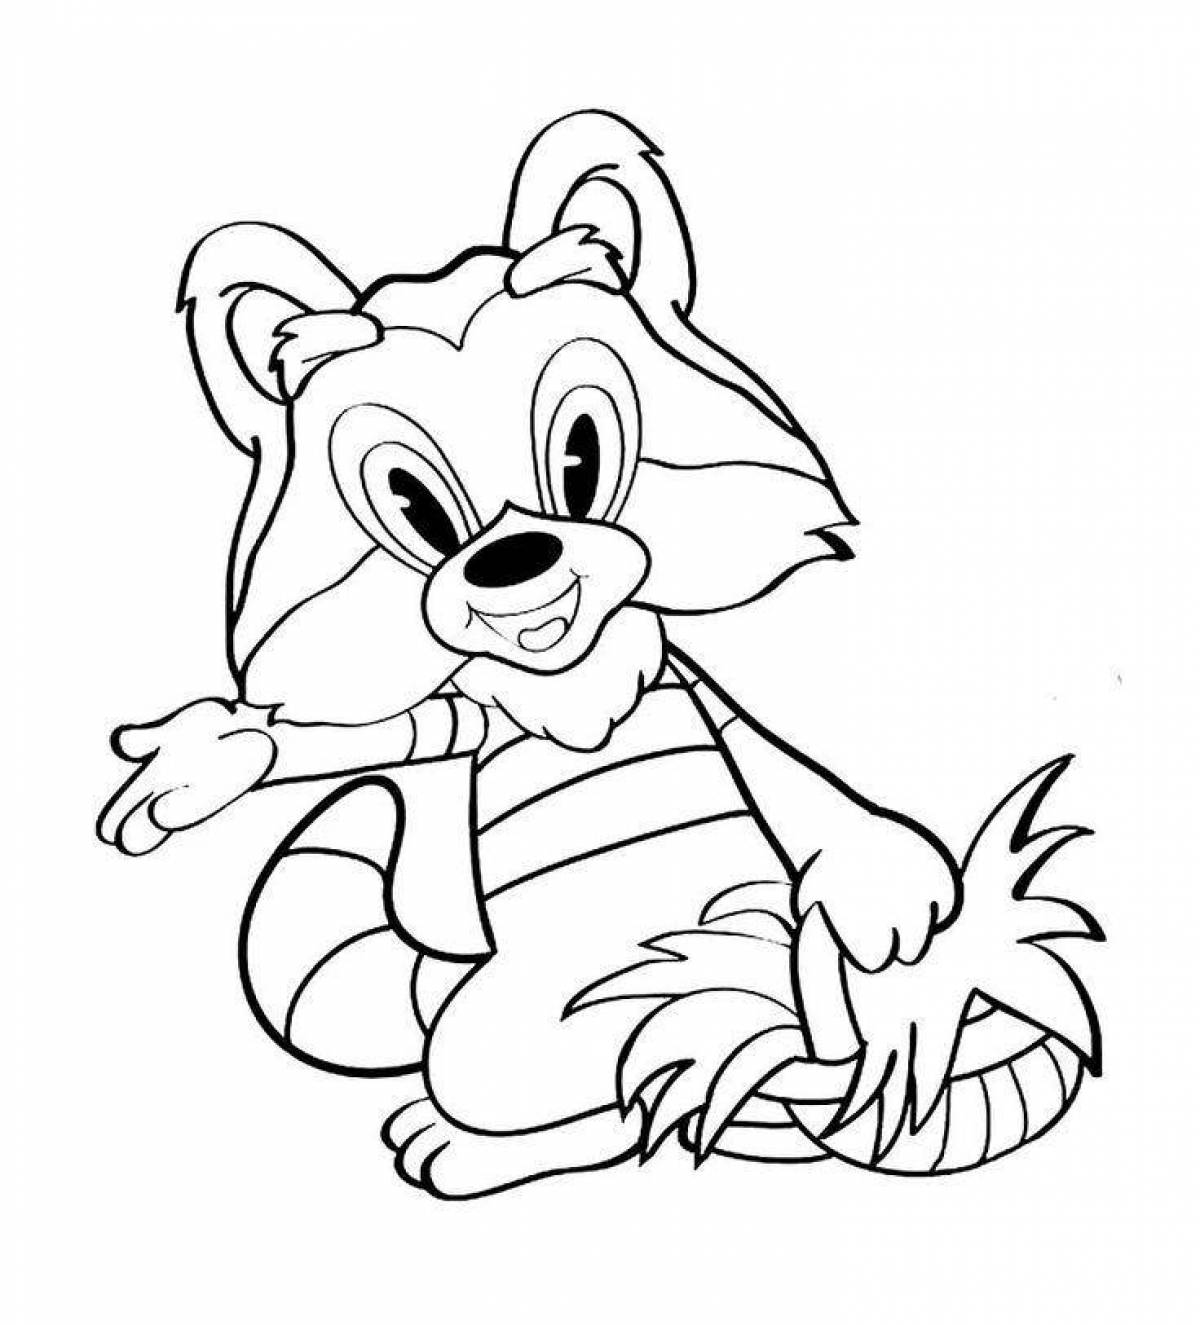 Coloring cute raccoon for kids